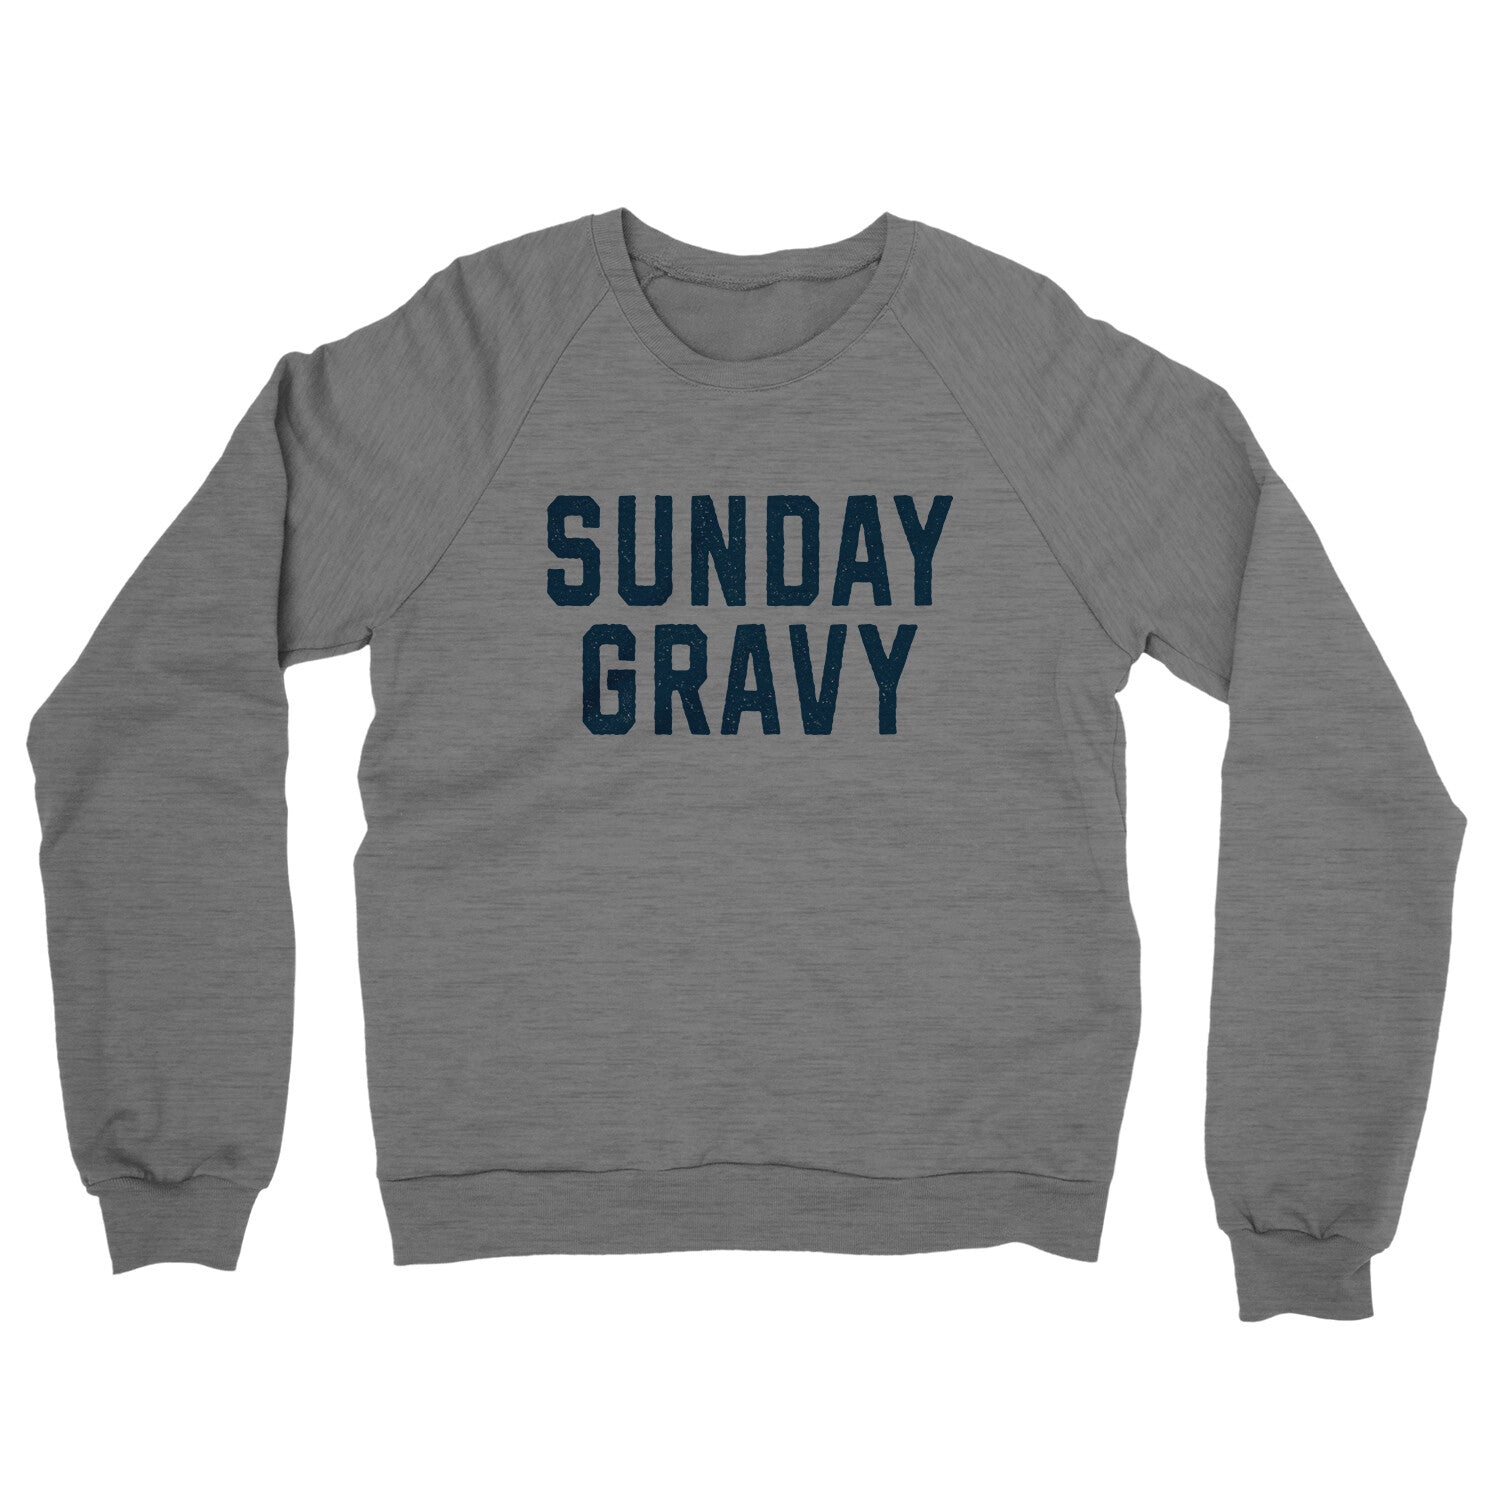 Sunday Gravy in Graphite Heather Color